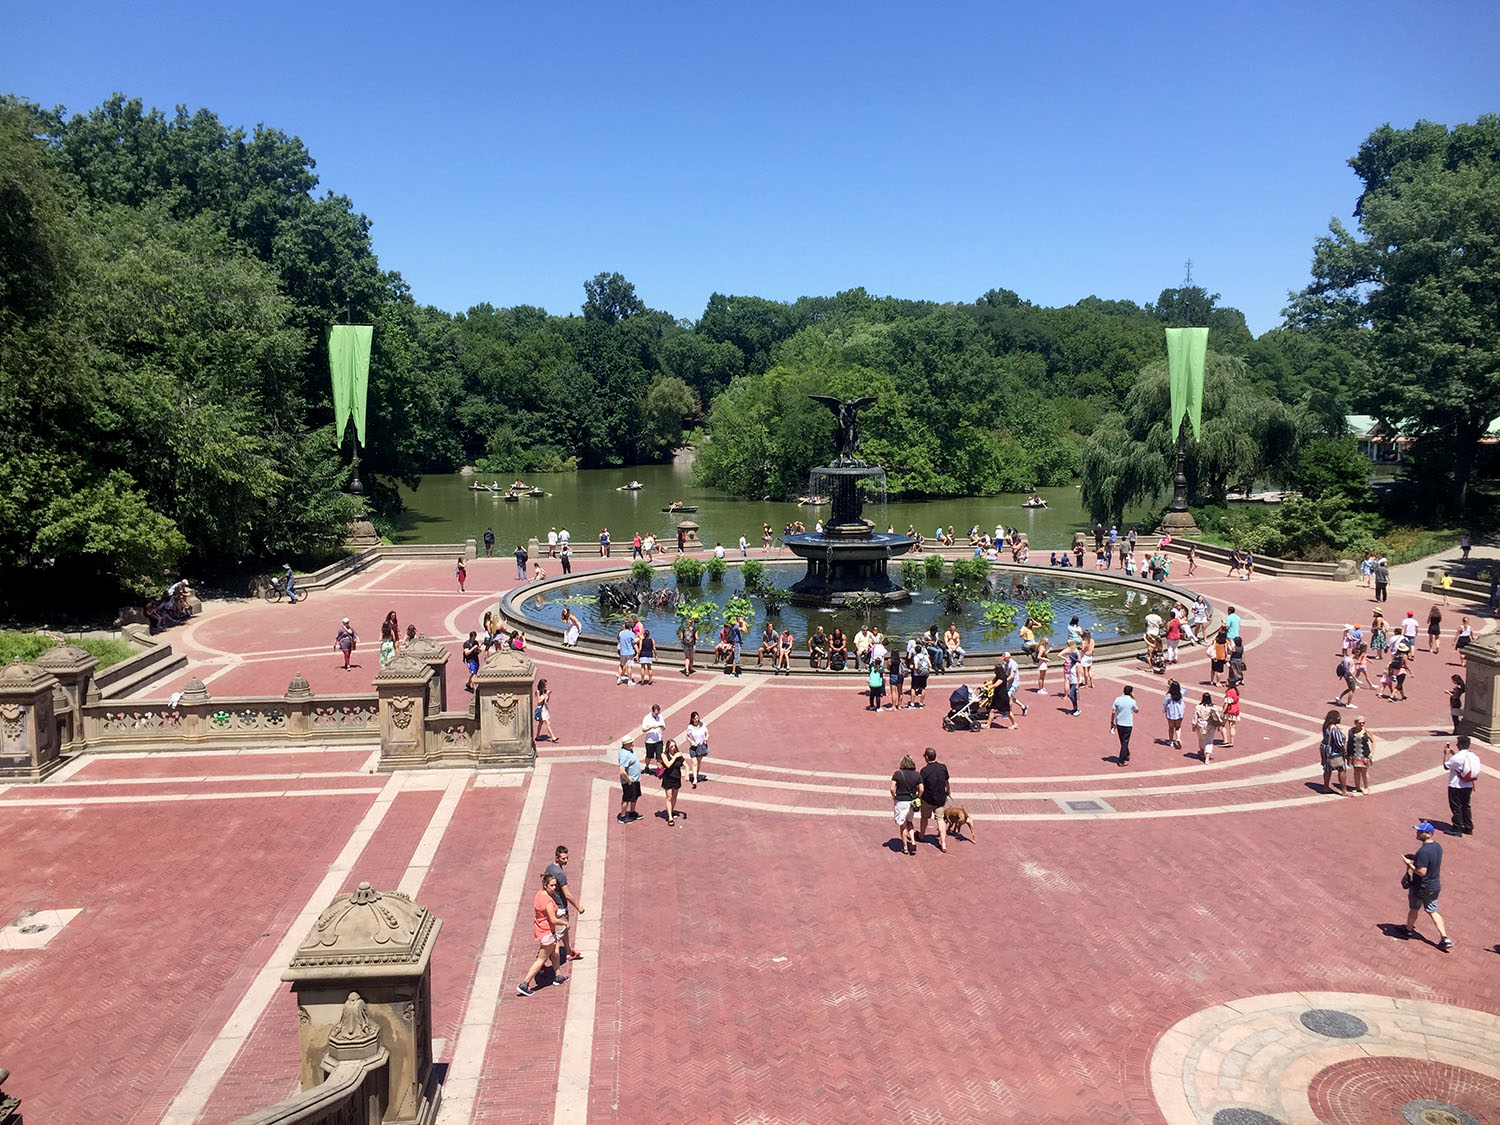  img_7778 . jpg纽约市中央公园必做之事贝塞斯达喷泉